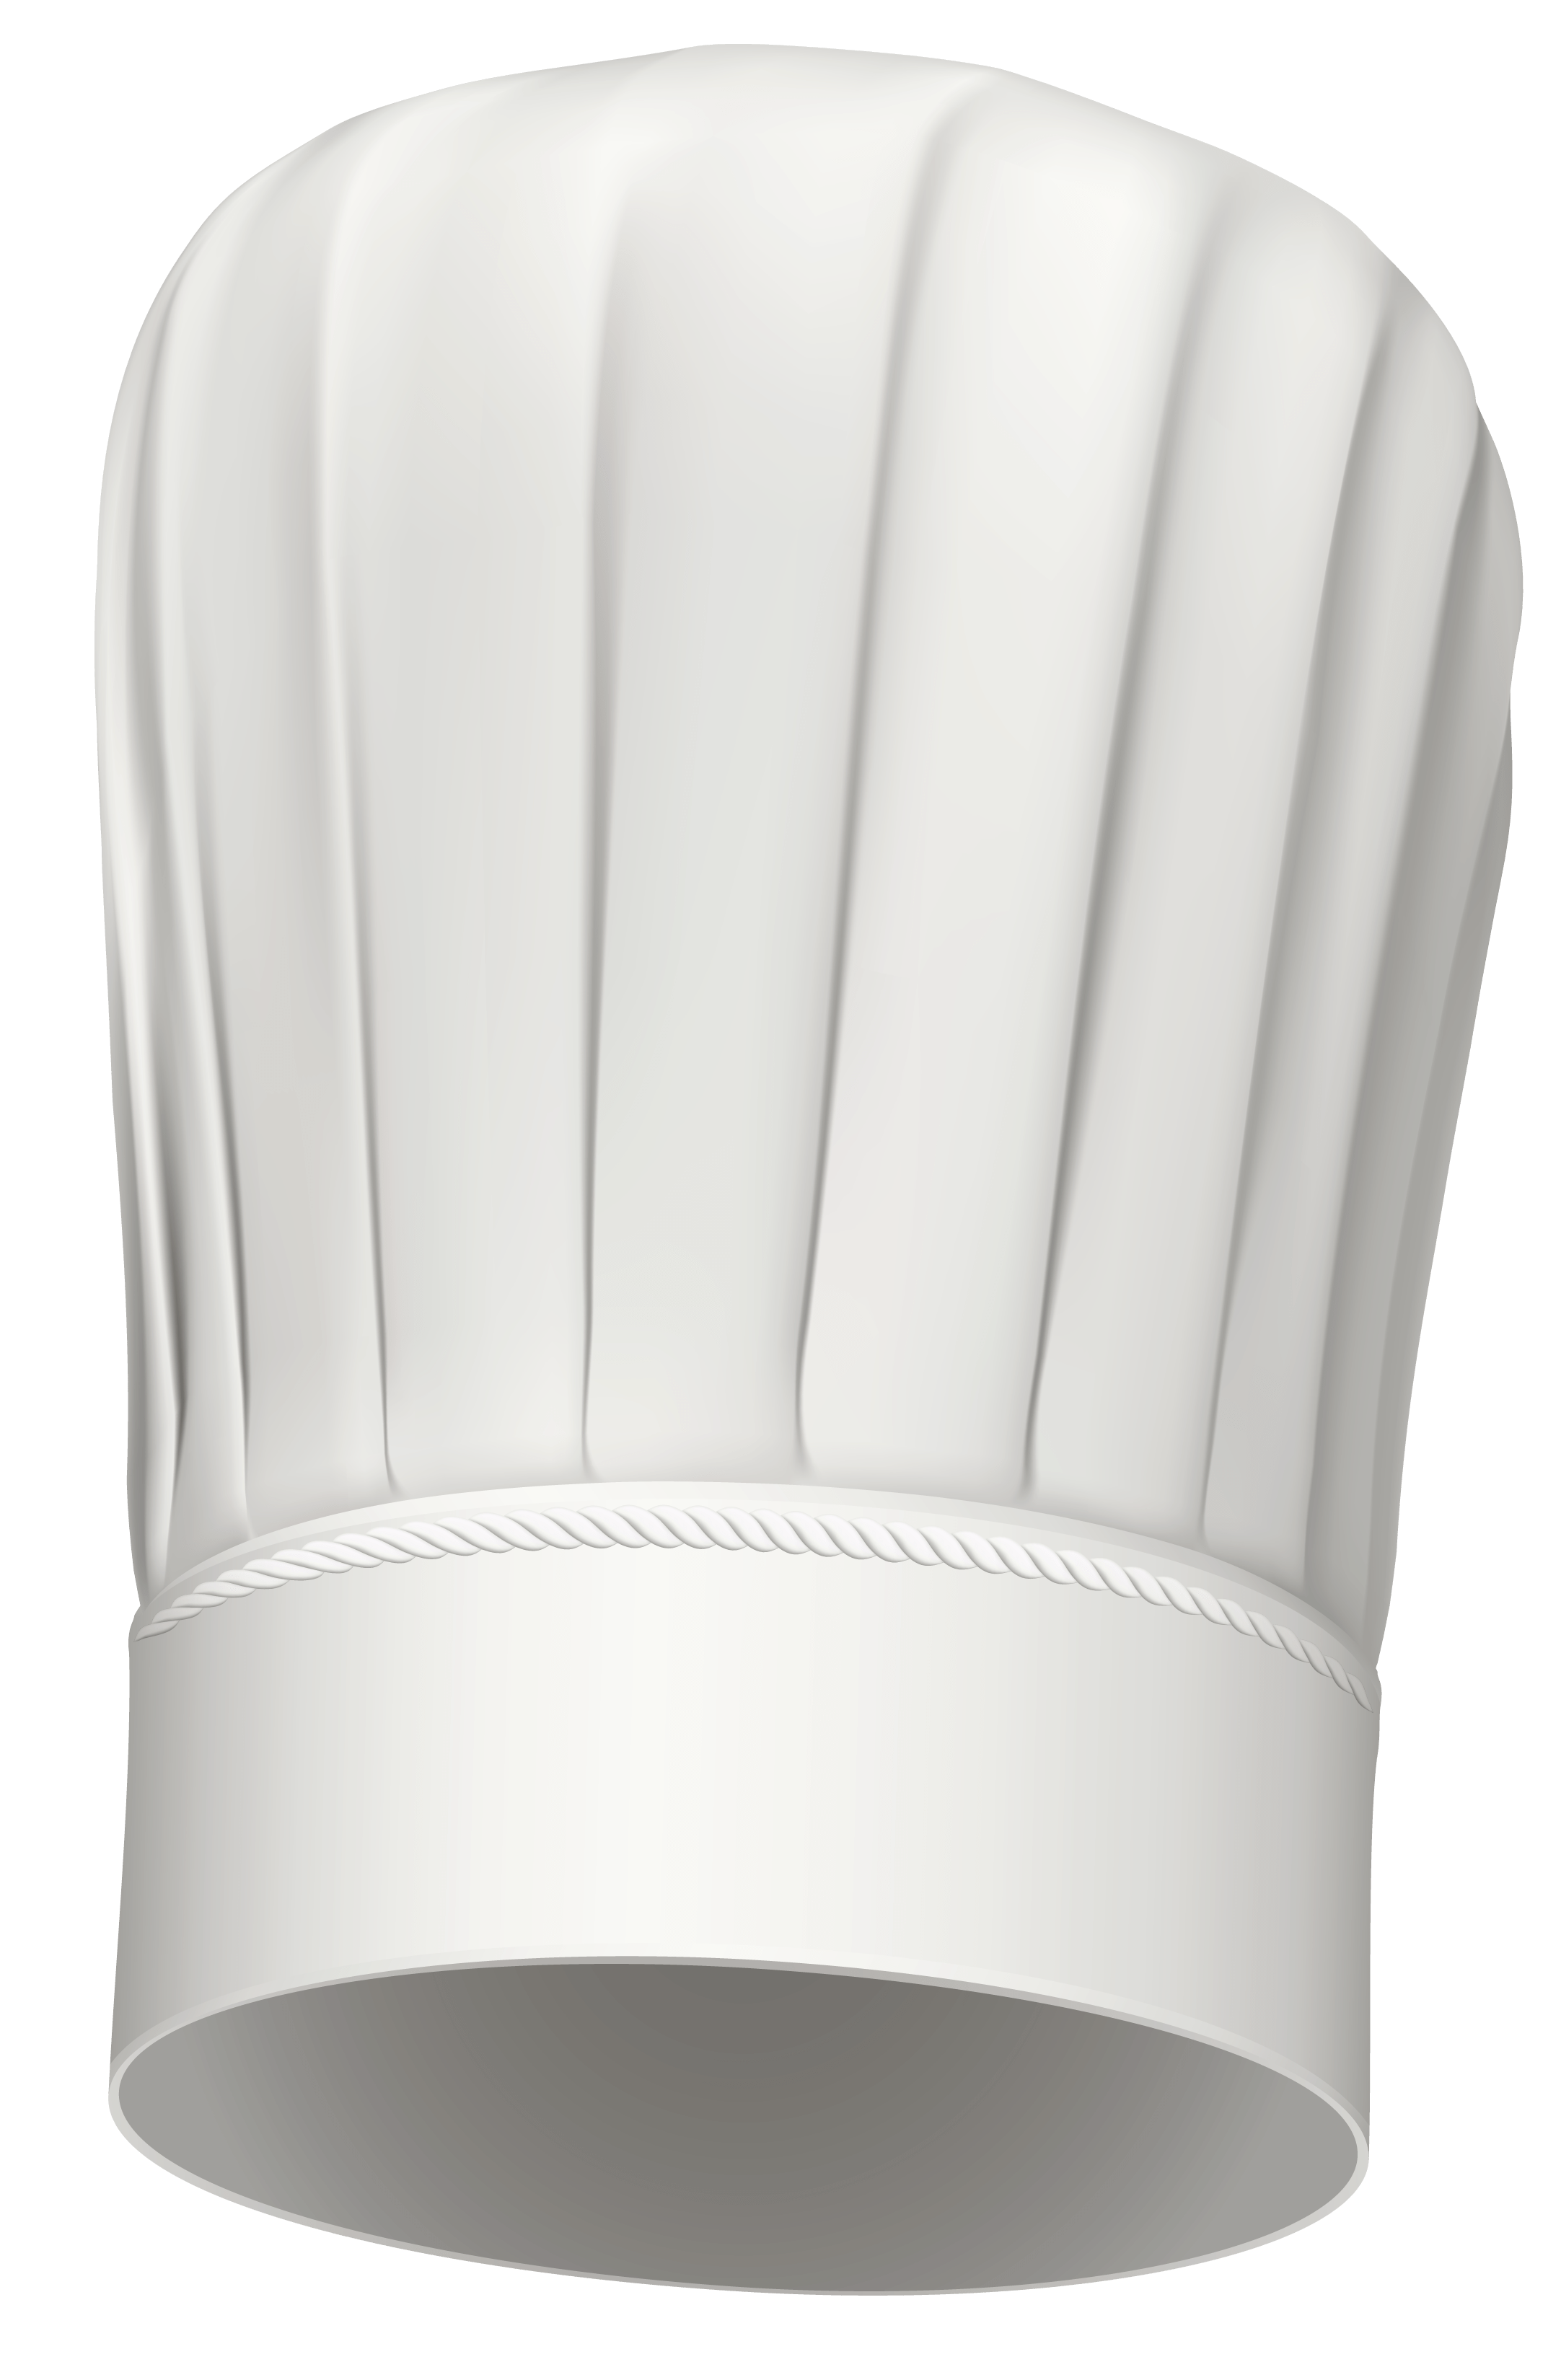 Download Chef Hat Free Clipart HQ HQ PNG Image FreePNGImg